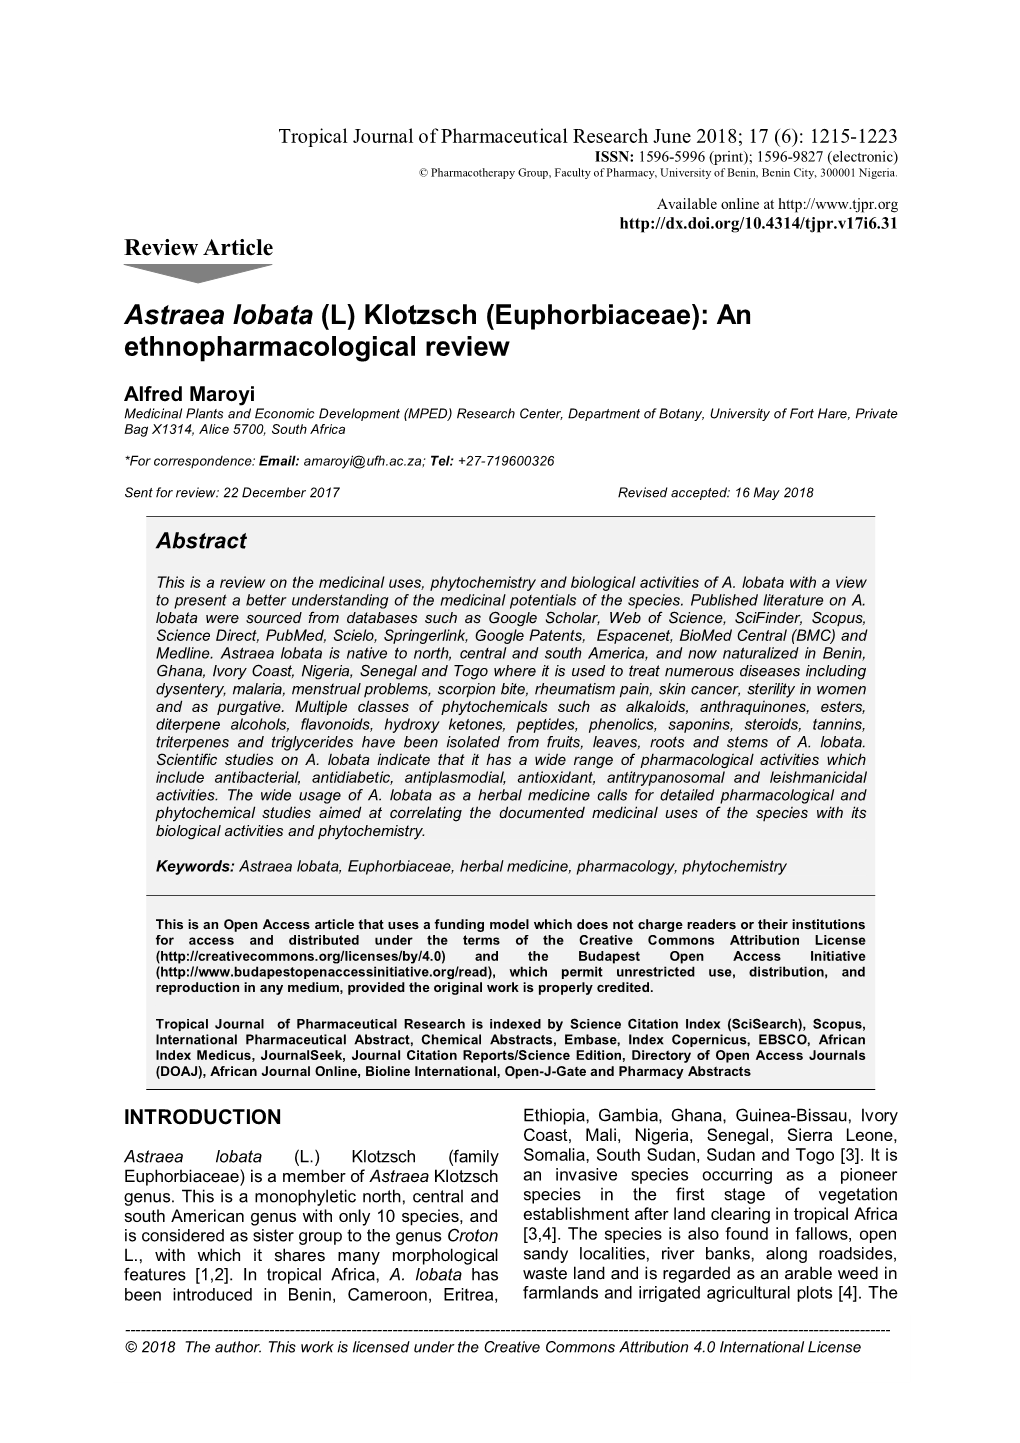 Astraea Lobata (L) Klotzsch (Euphorbiaceae): an Ethnopharmacological Review